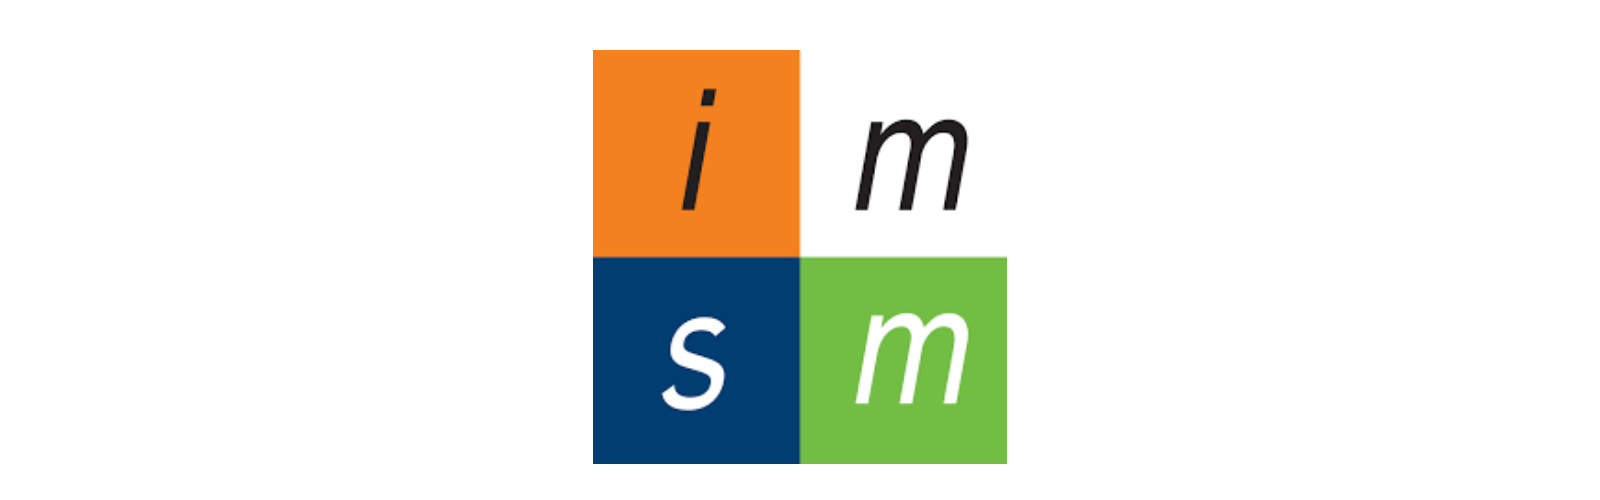 IMSM logo